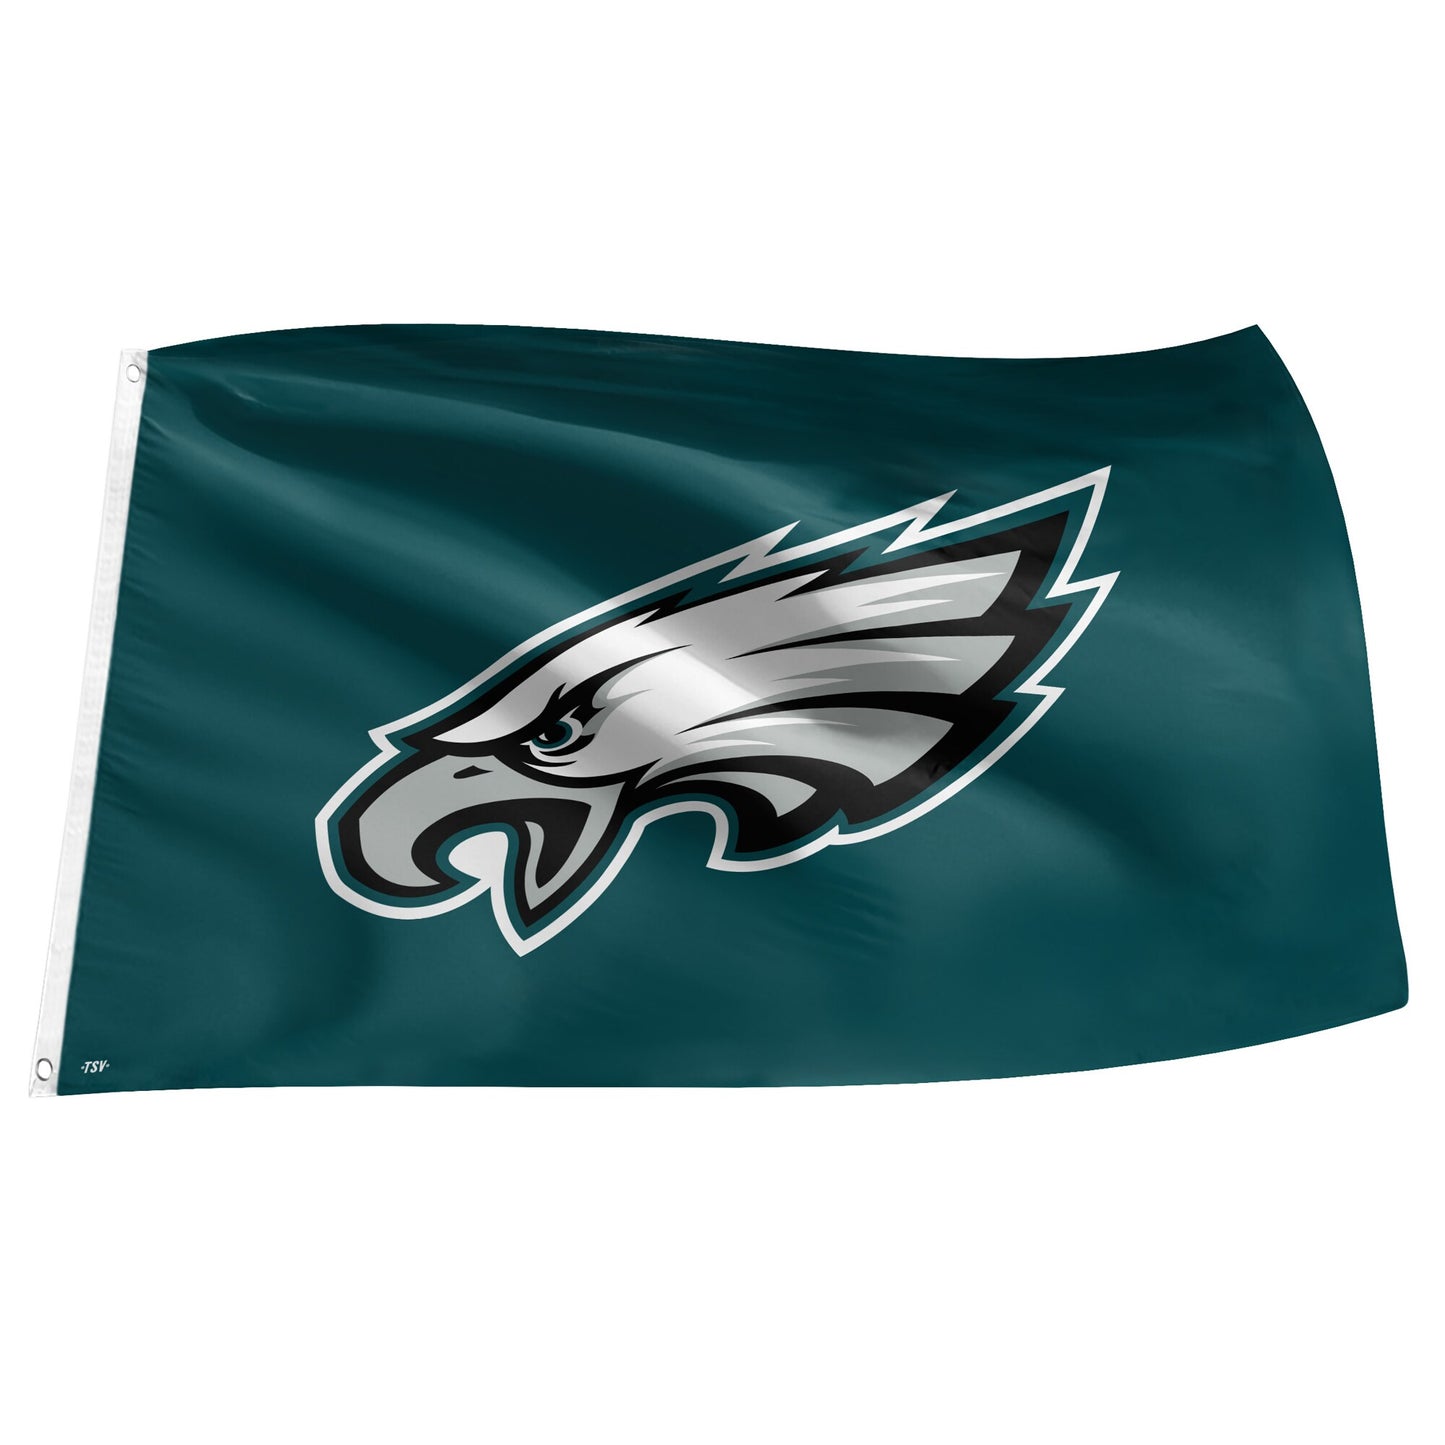 NFL Flag 3x5 Eagles